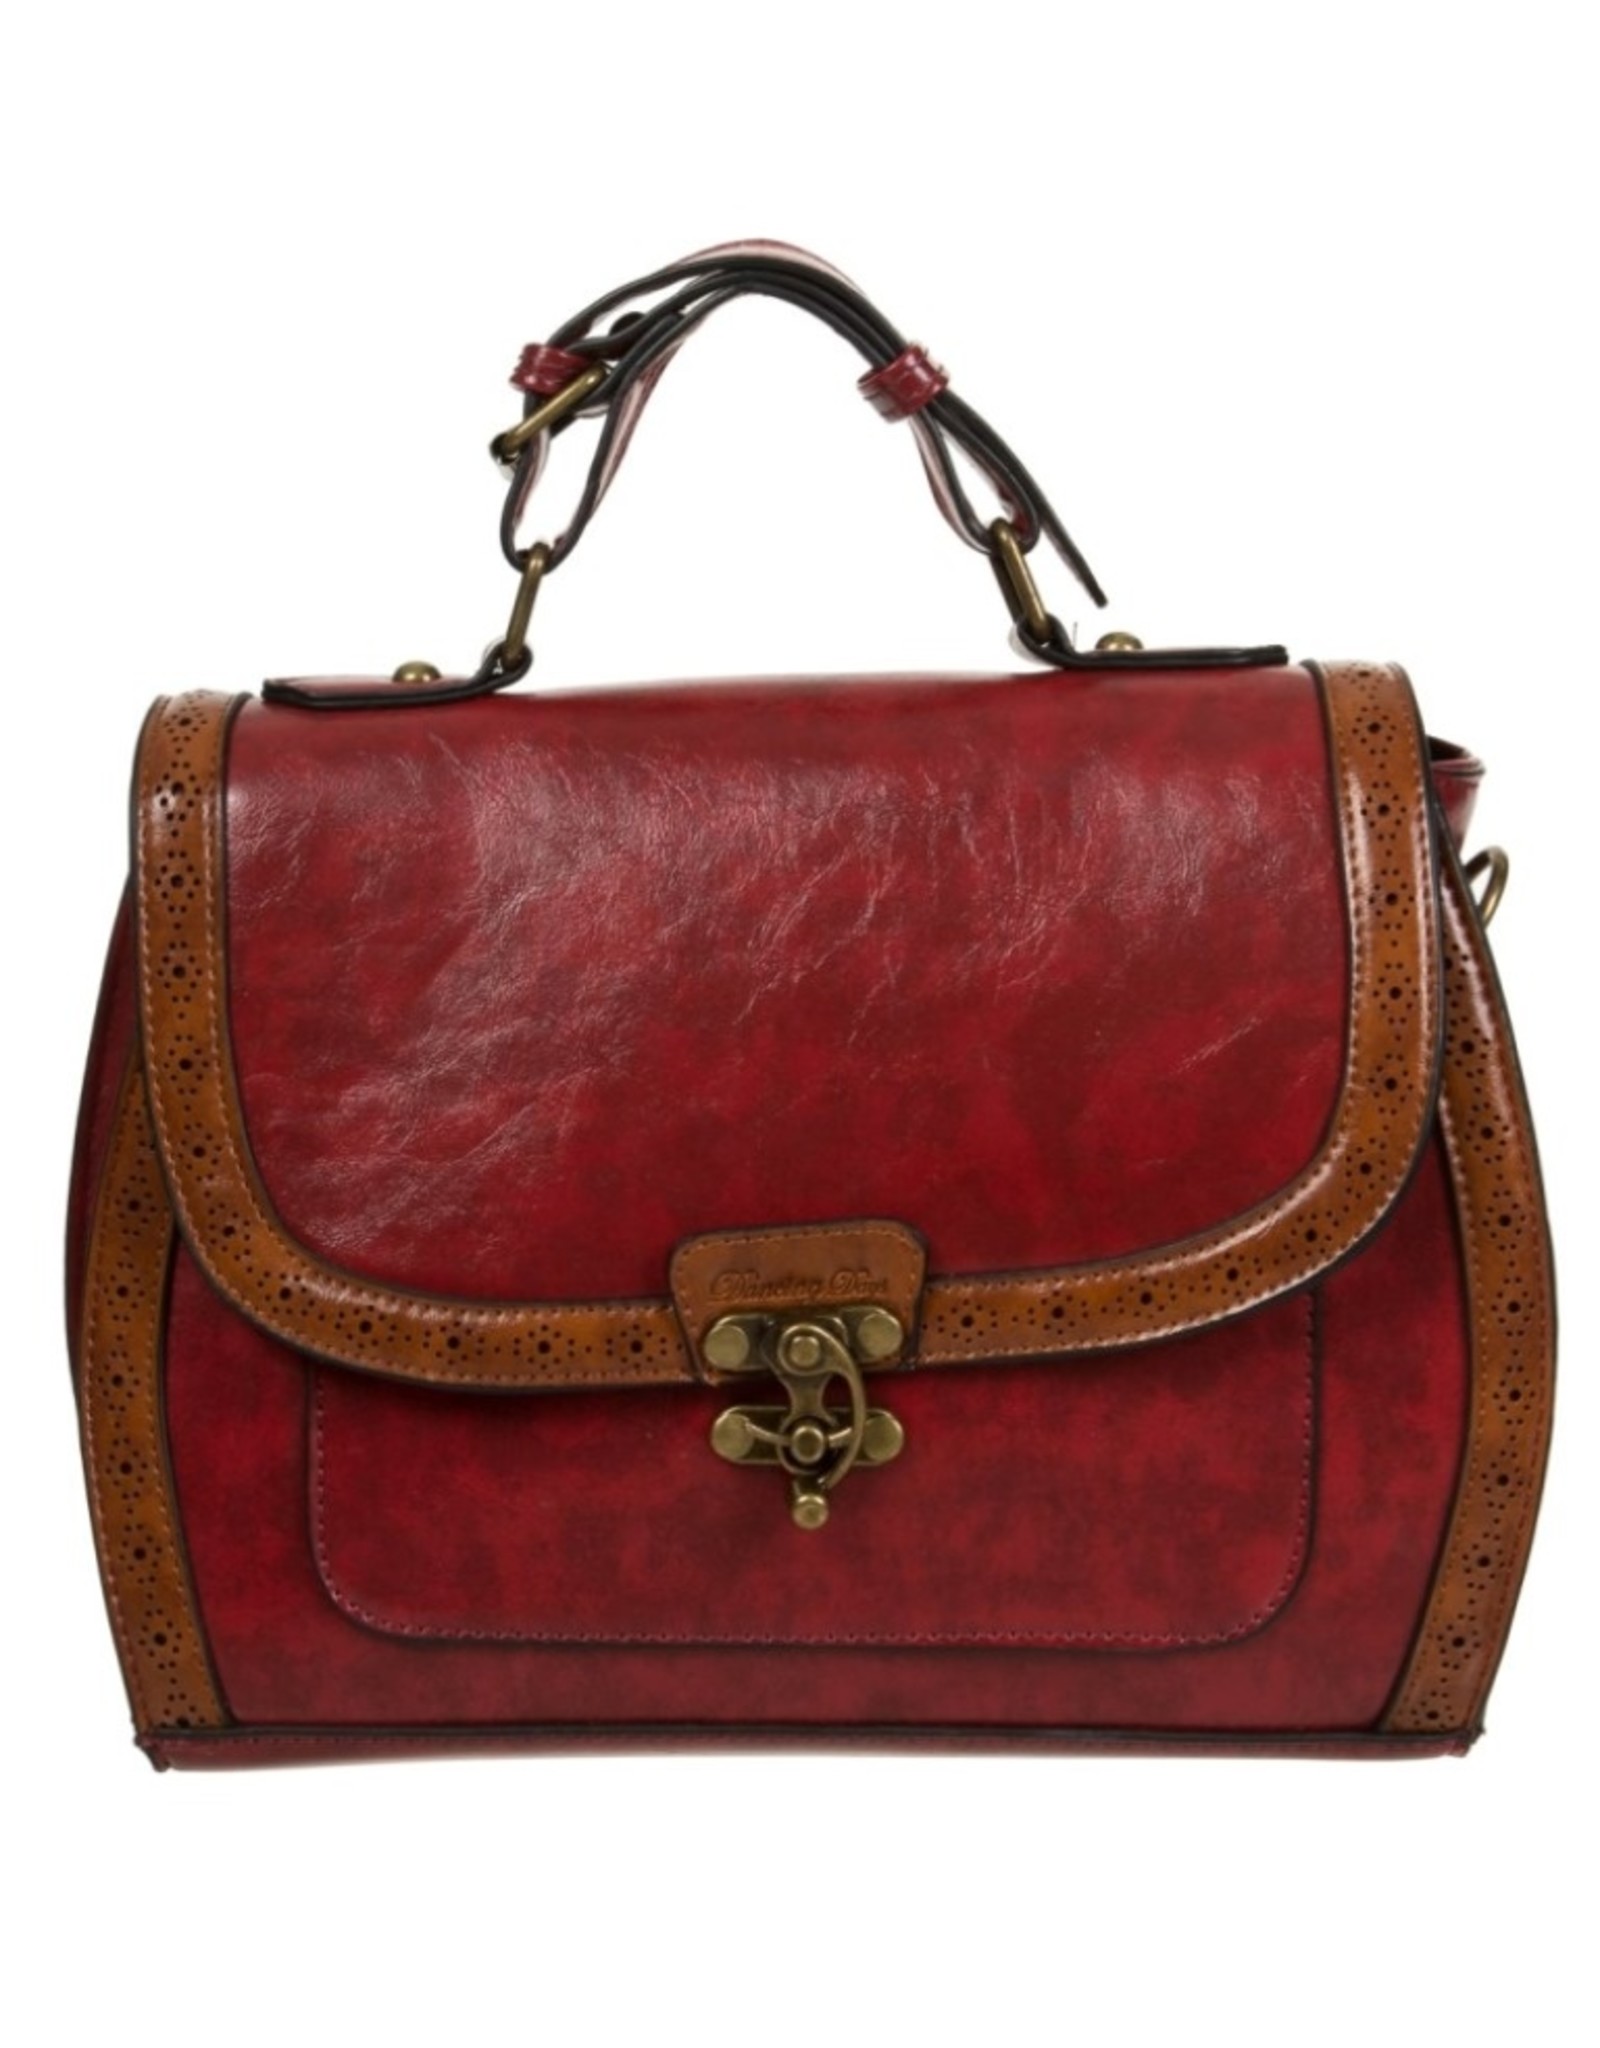 Banned Steampunk bags Gothic bags - Banned Stevie Steampunk handbag red